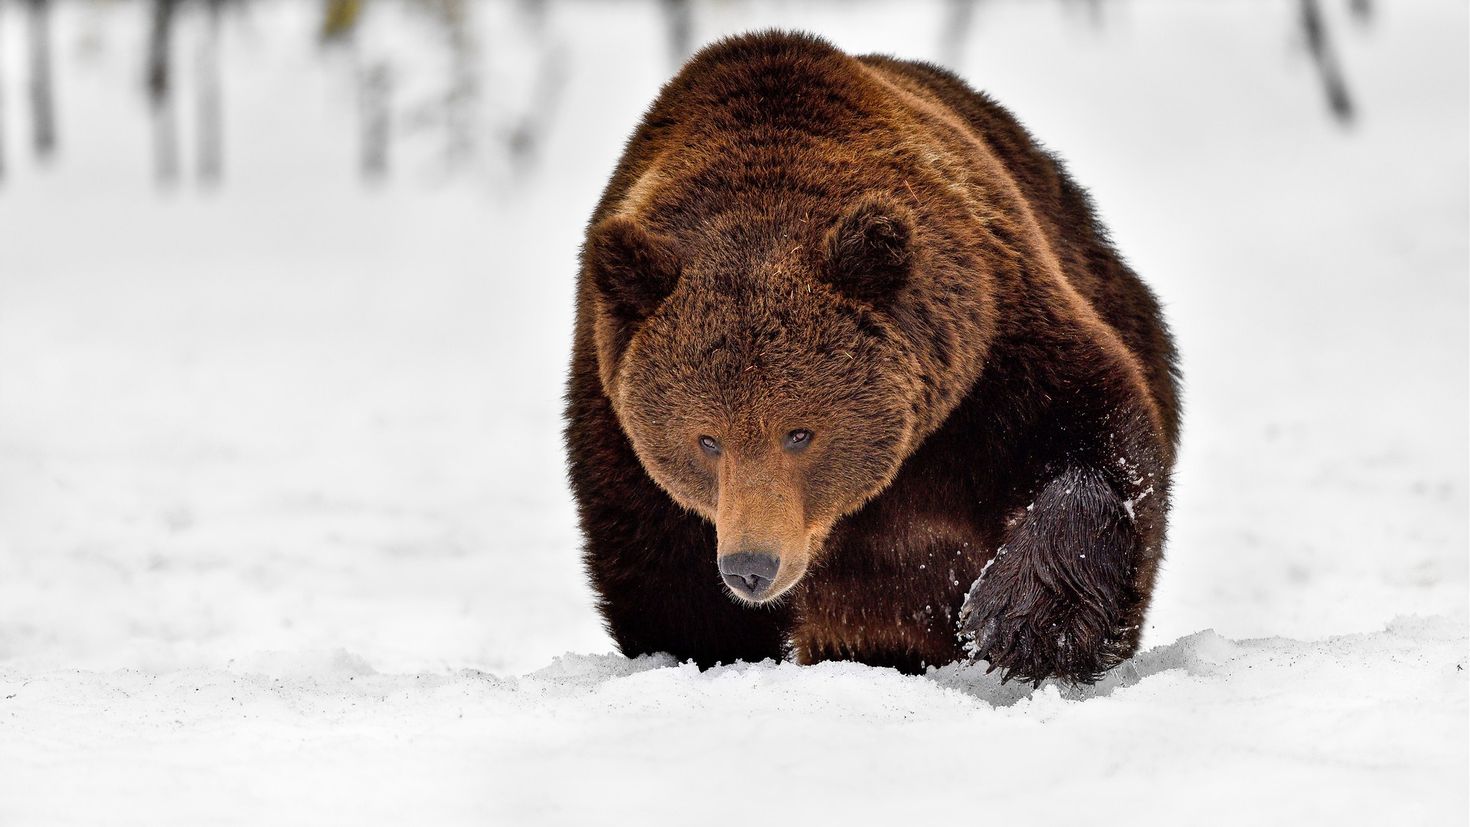 Медведь в сугробе. Бурый медведь зимой. Медведь зимой. Мишка бурый. Бурый медведь в снегу.